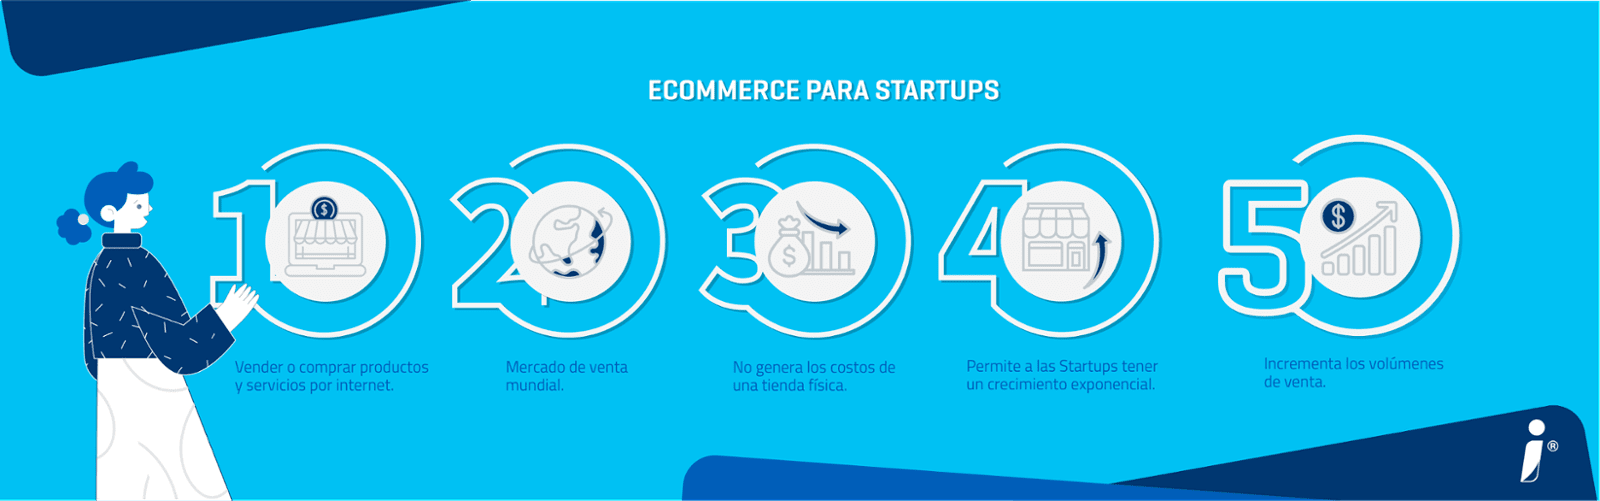 infografía - ecommerce para startups